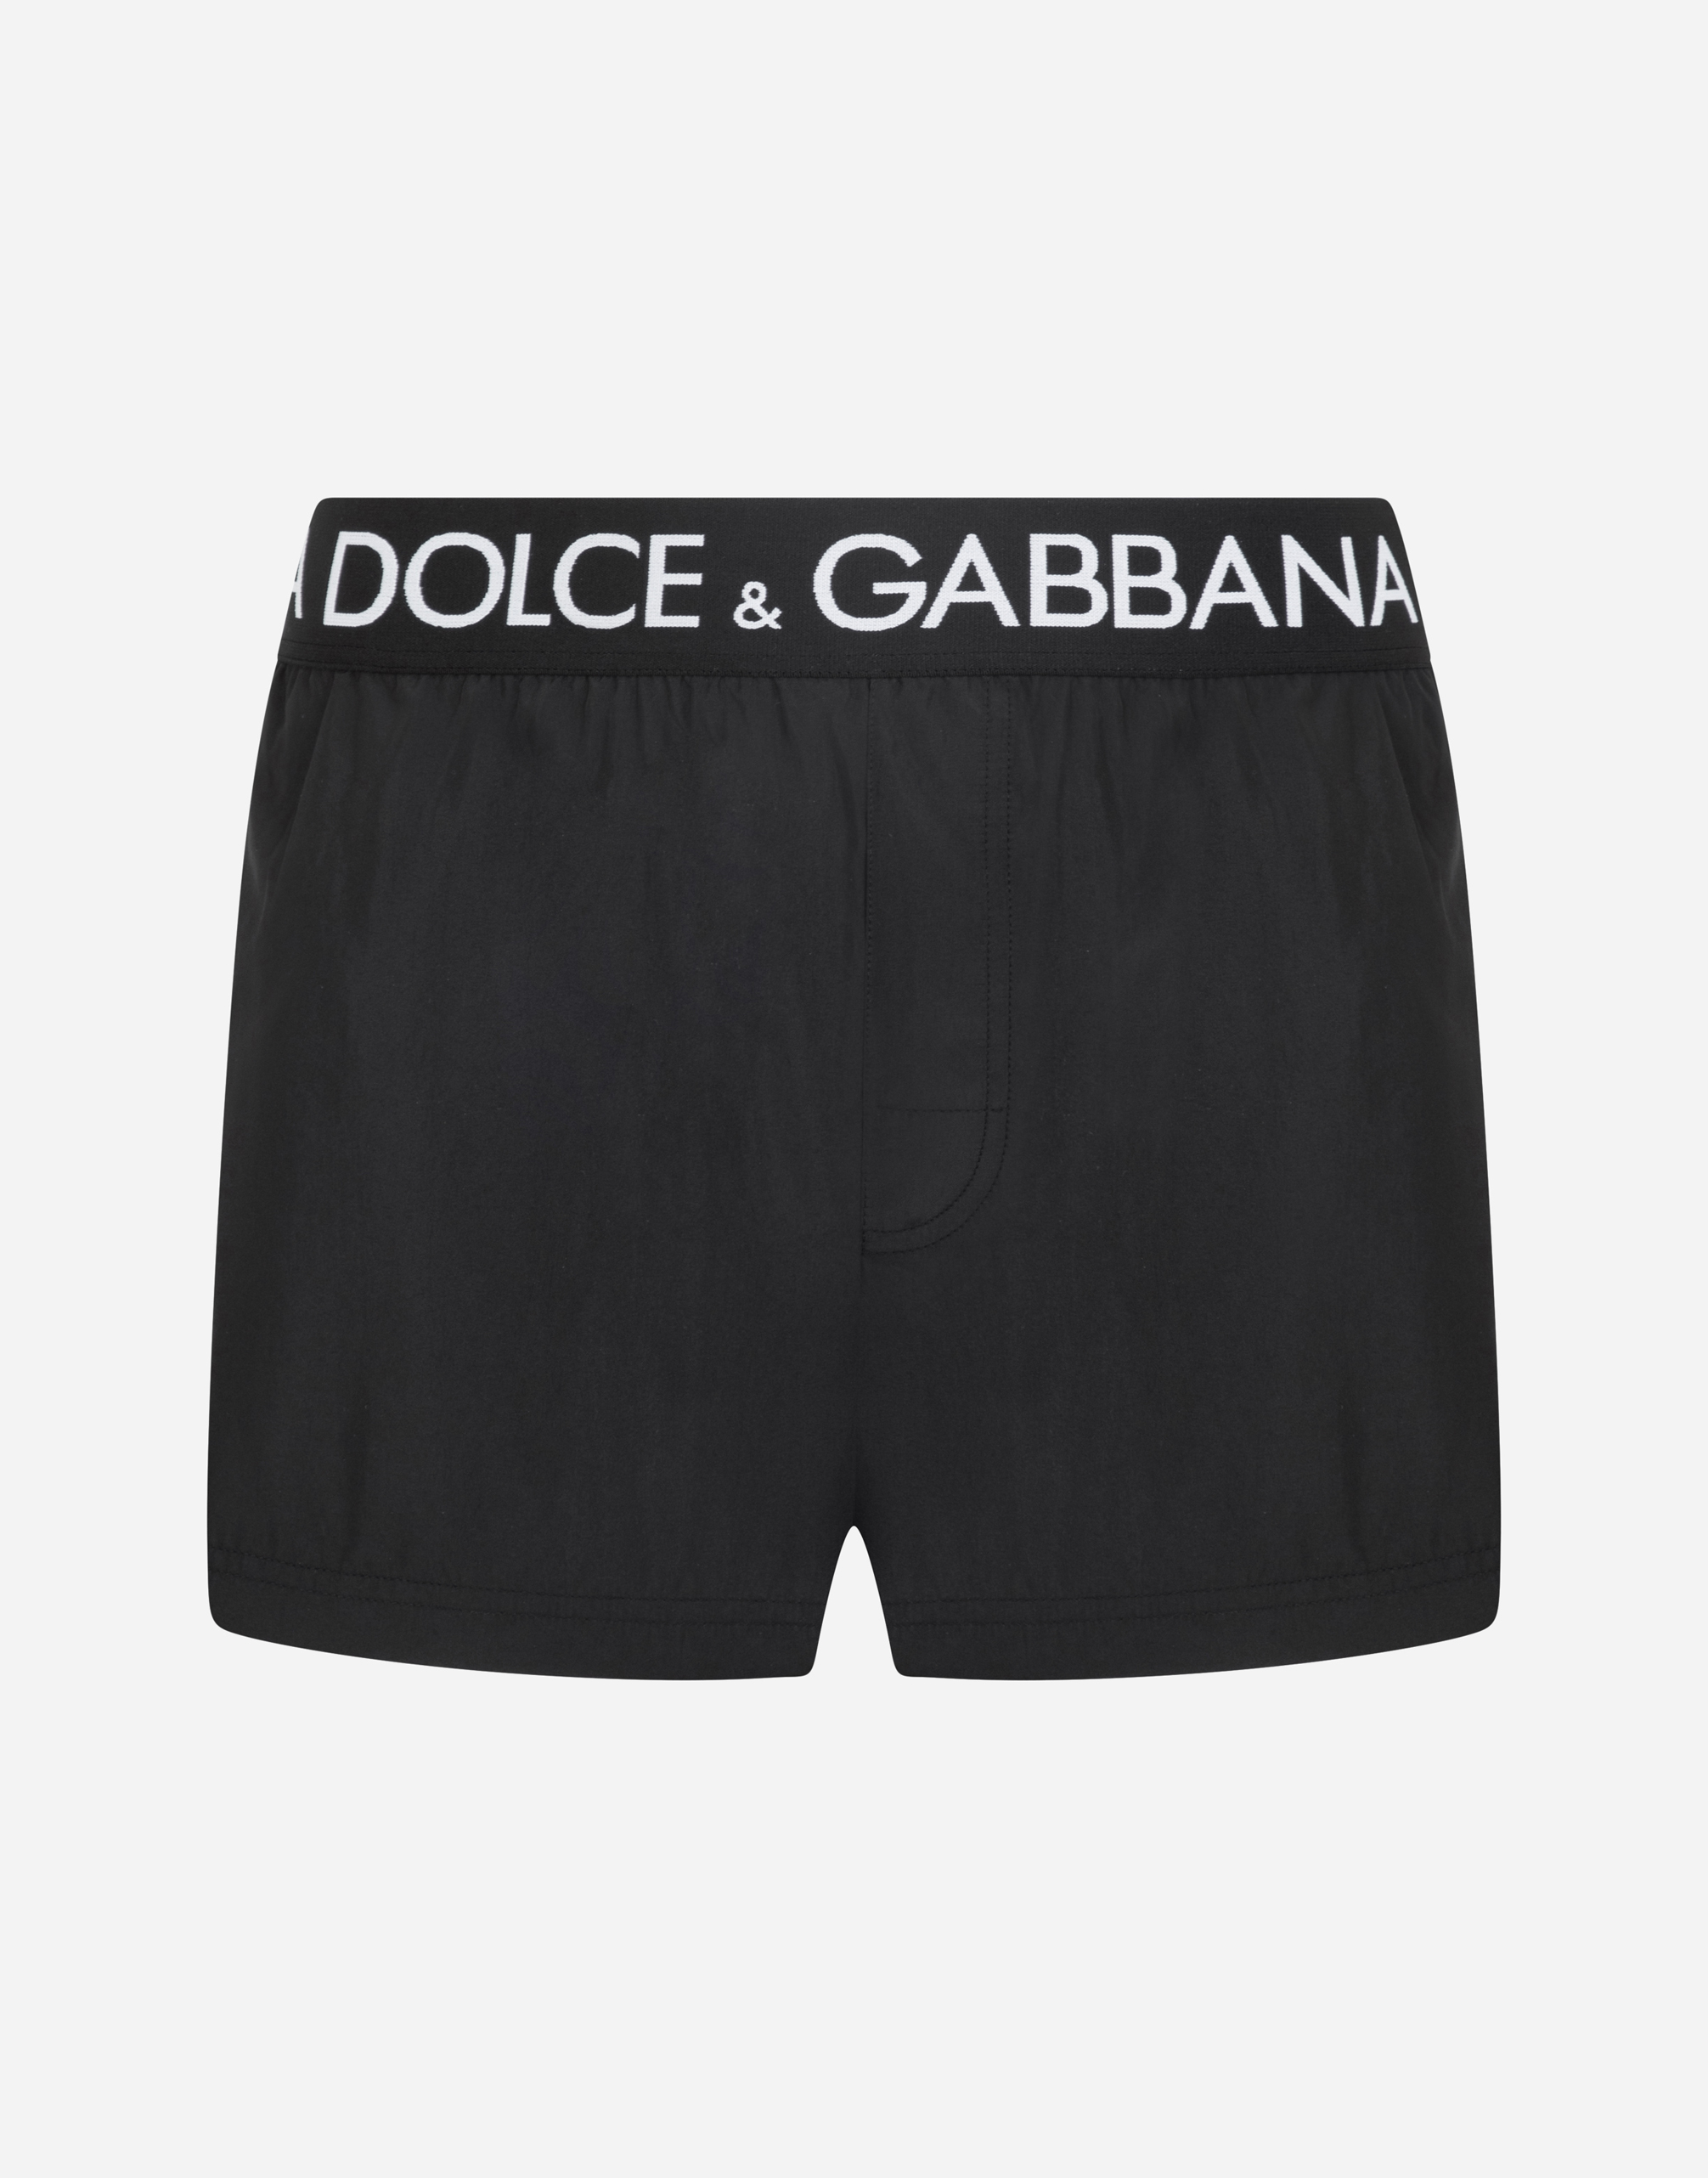 Dolce & Gabbana Short Swim Trunks With Branded Stretch Waistband In Black